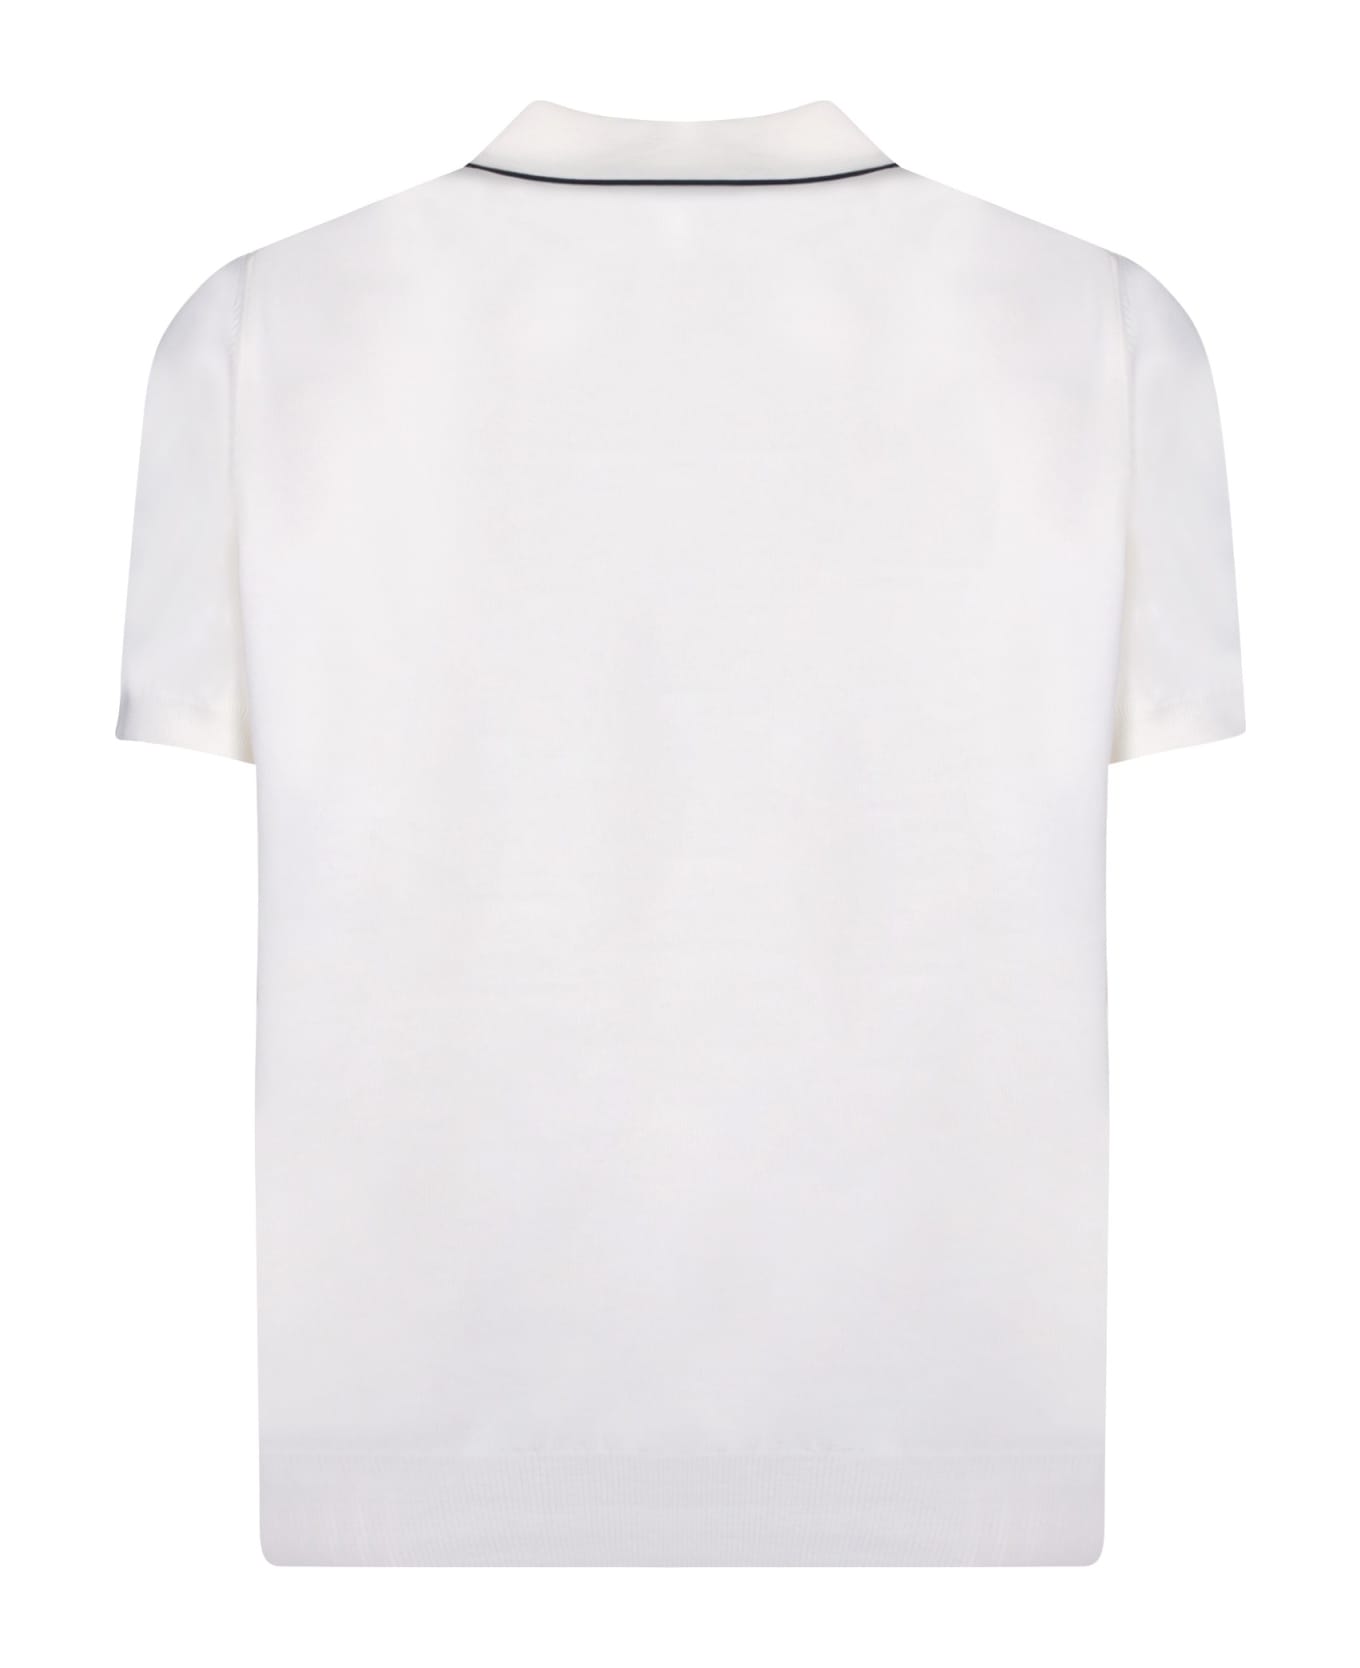 Canali Edges Blue/white Polo Shirt - White